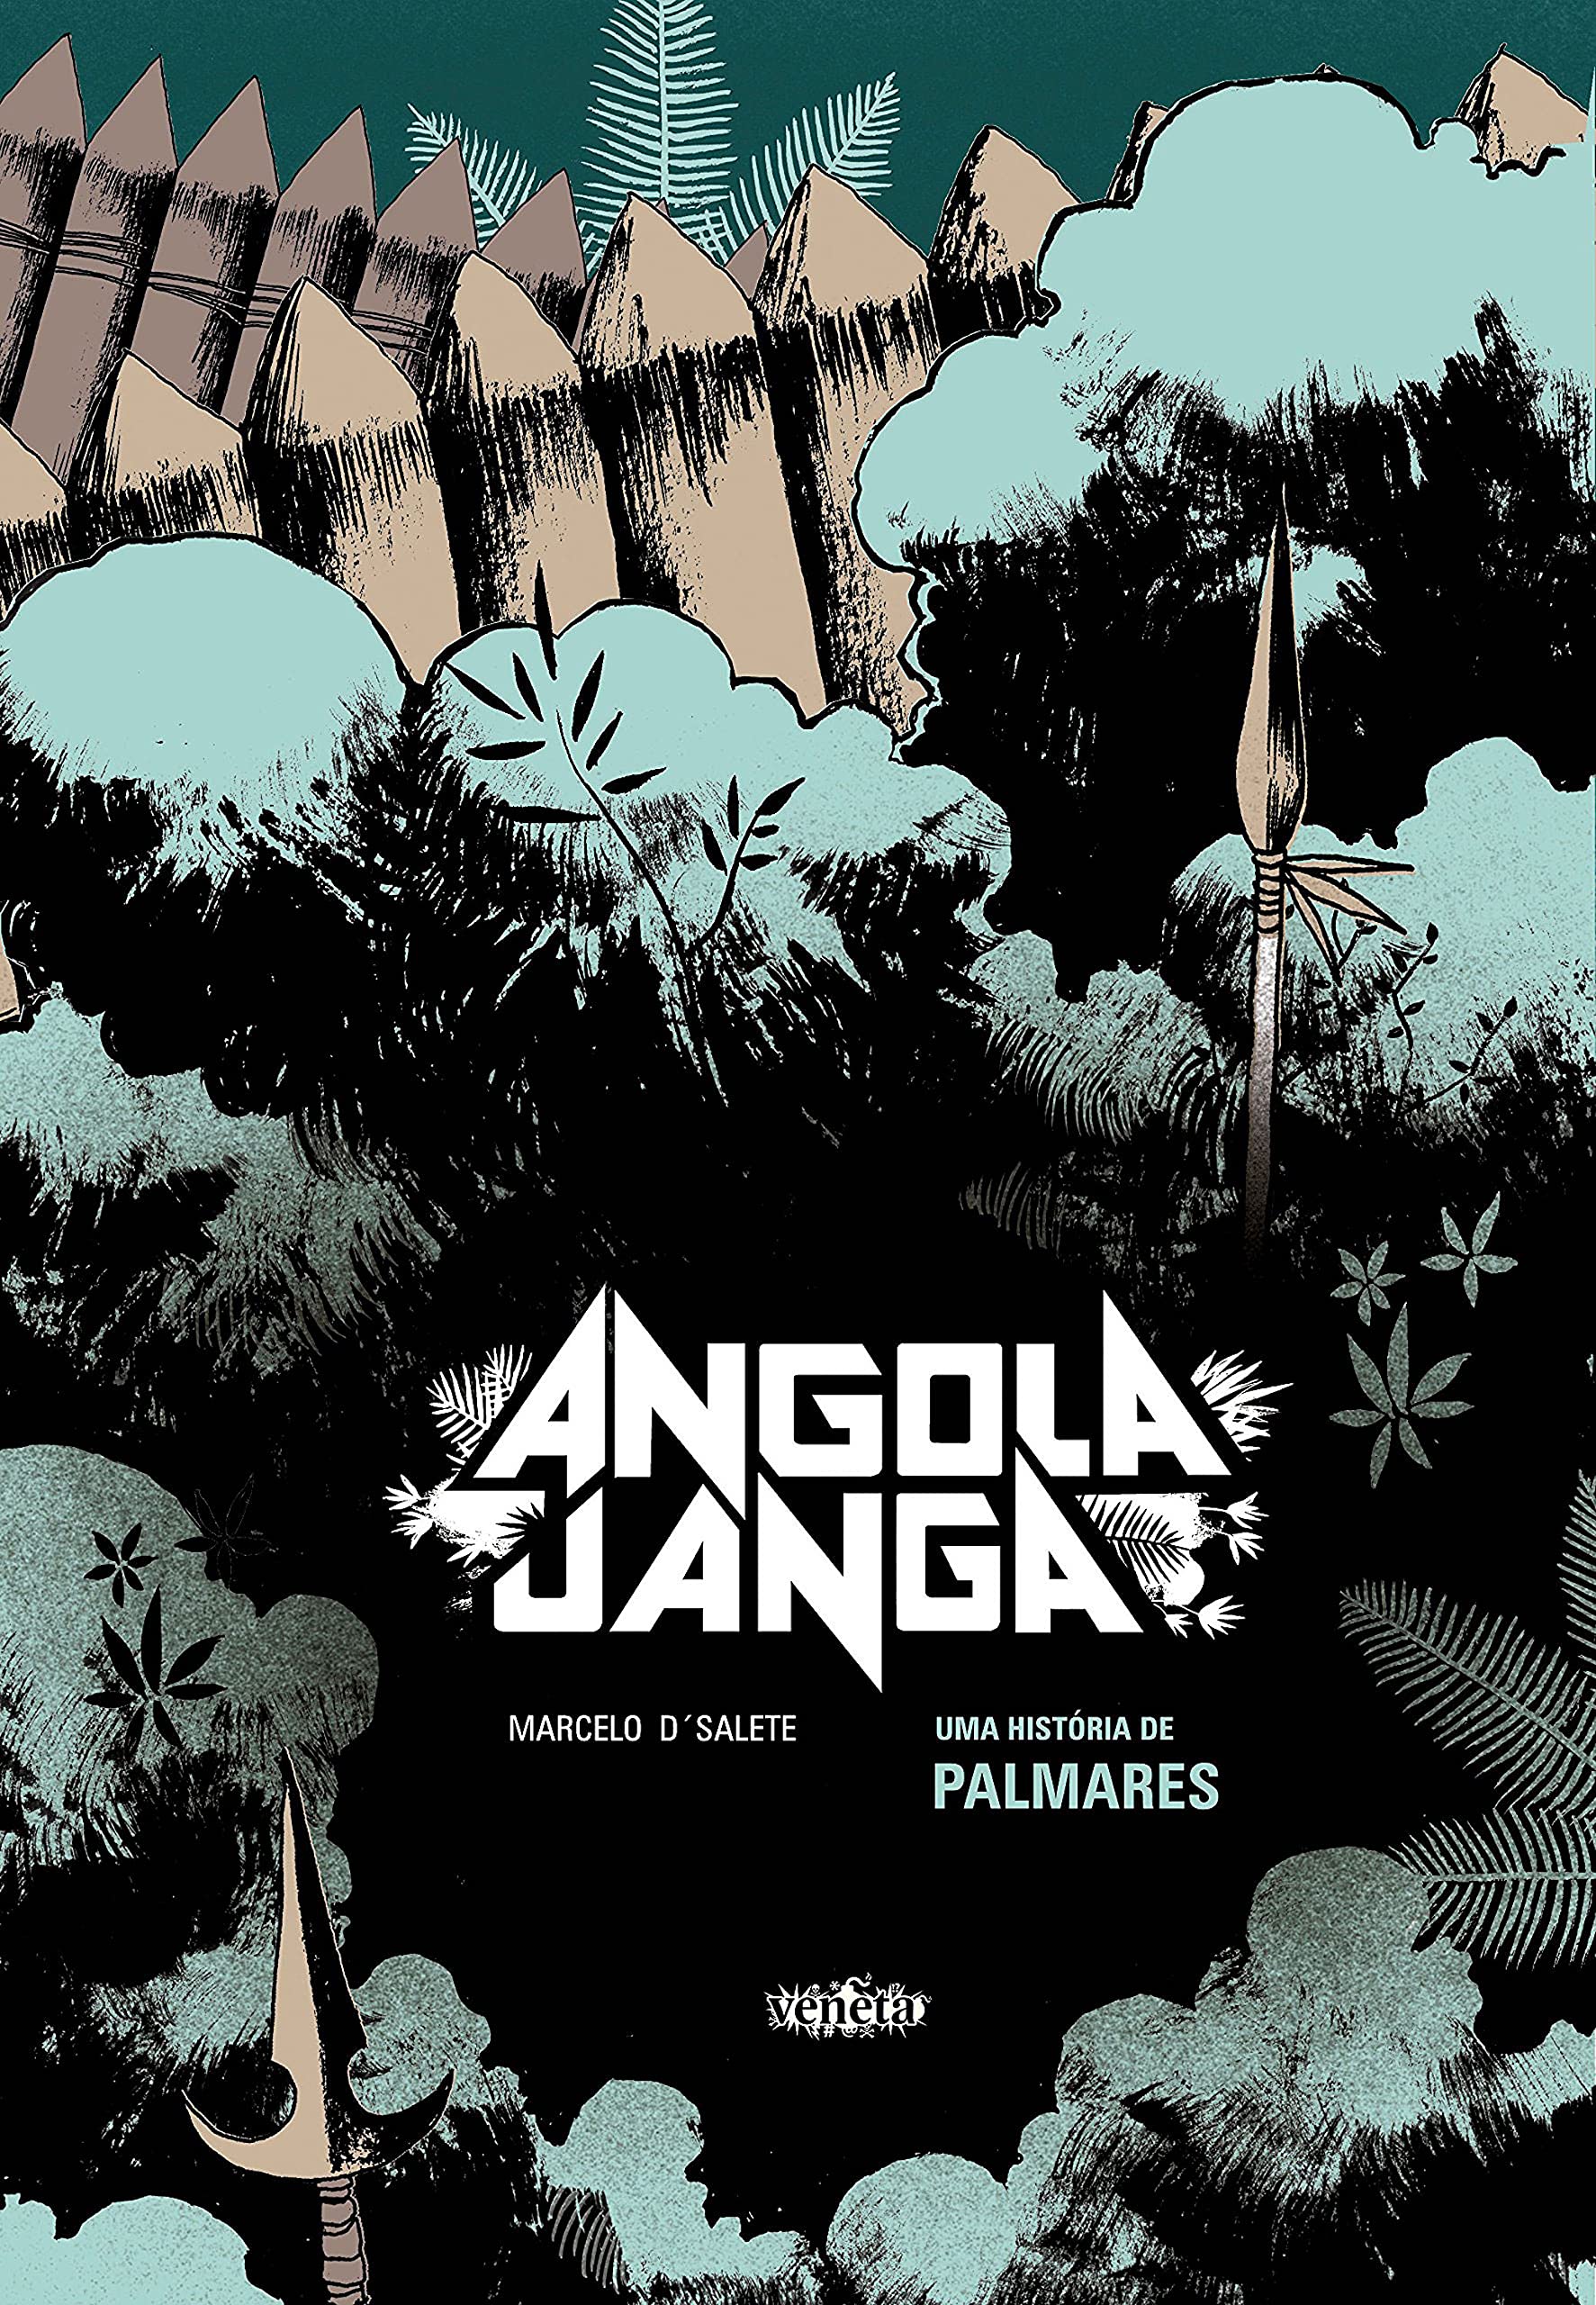 Angola Janga (Portuguese Edition)